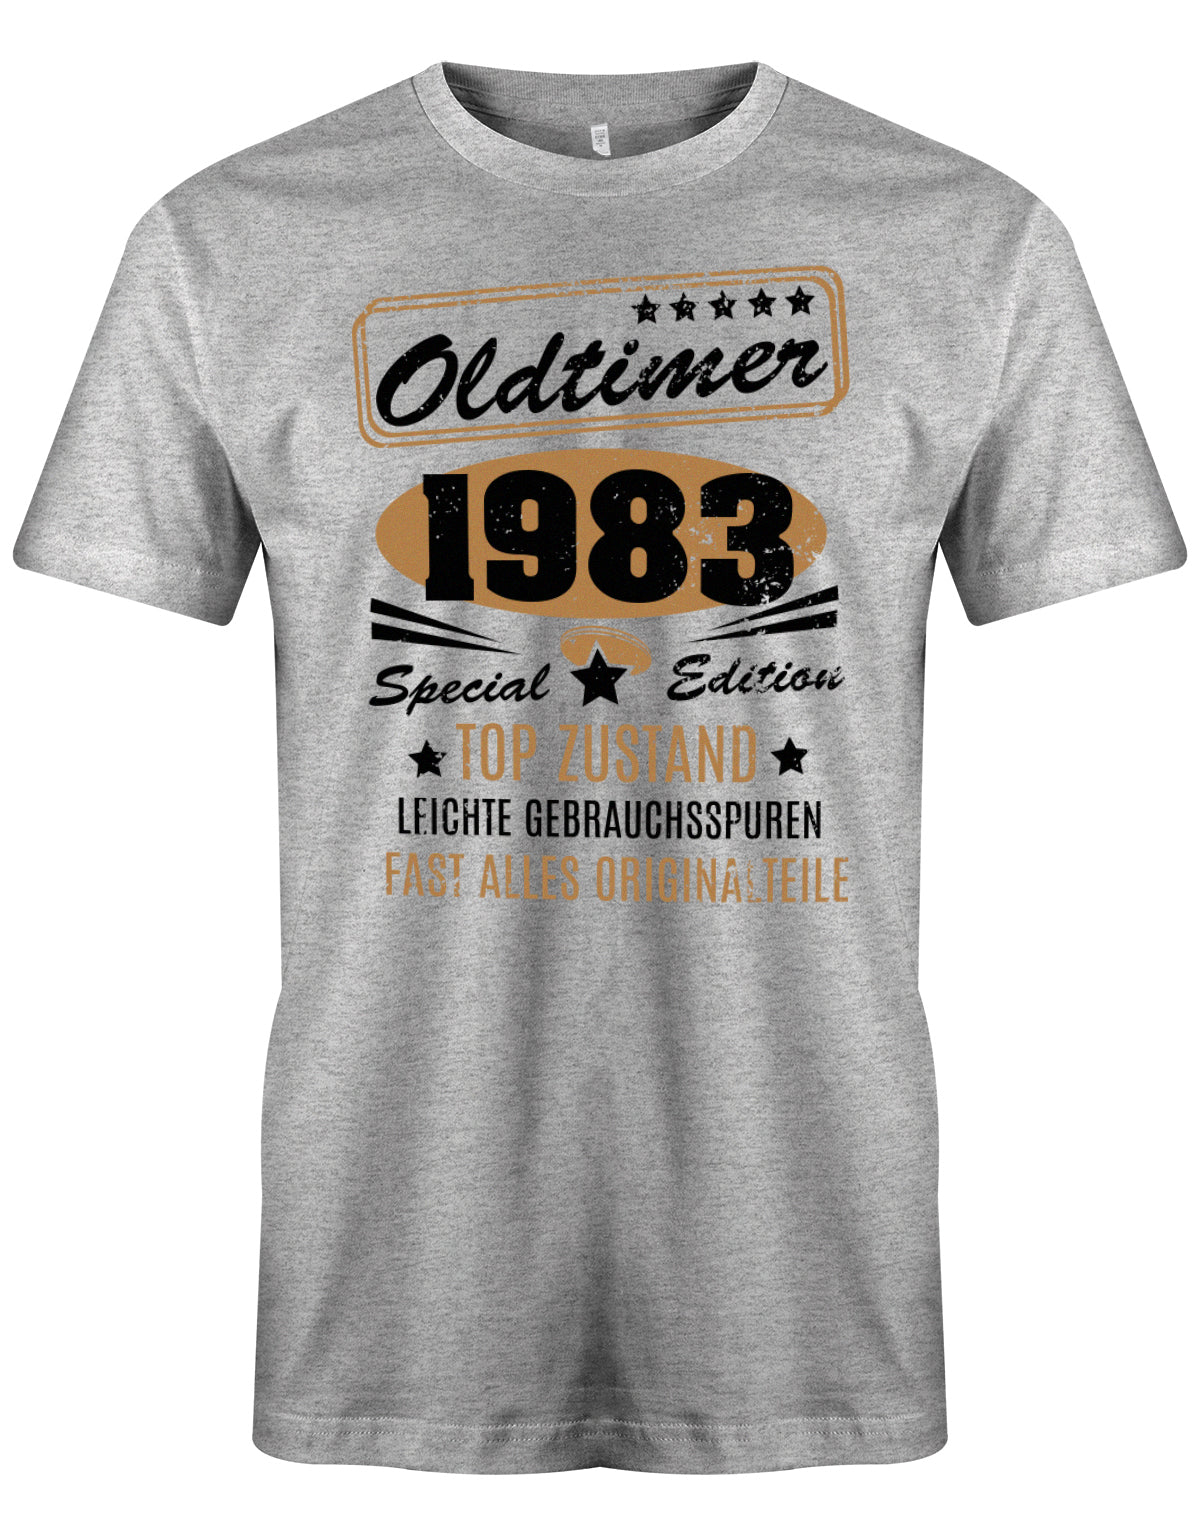 Oldtimer 1983 Special Edition Top Zustand - T-Shirt 40 Geburtstag Männer myShirtStore Grau